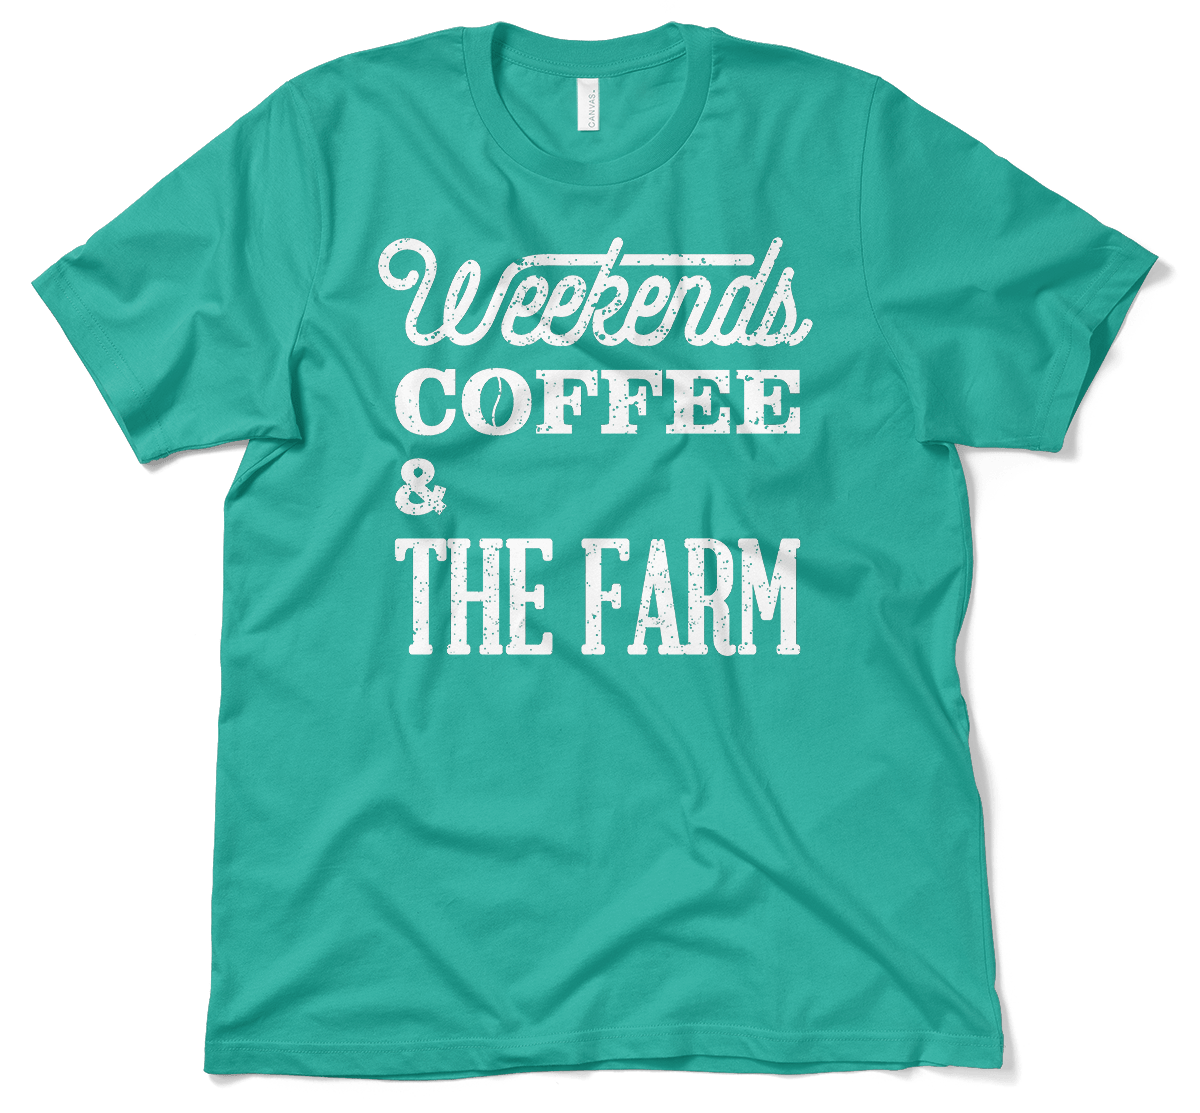 Weekends, Coffee, & The Farm